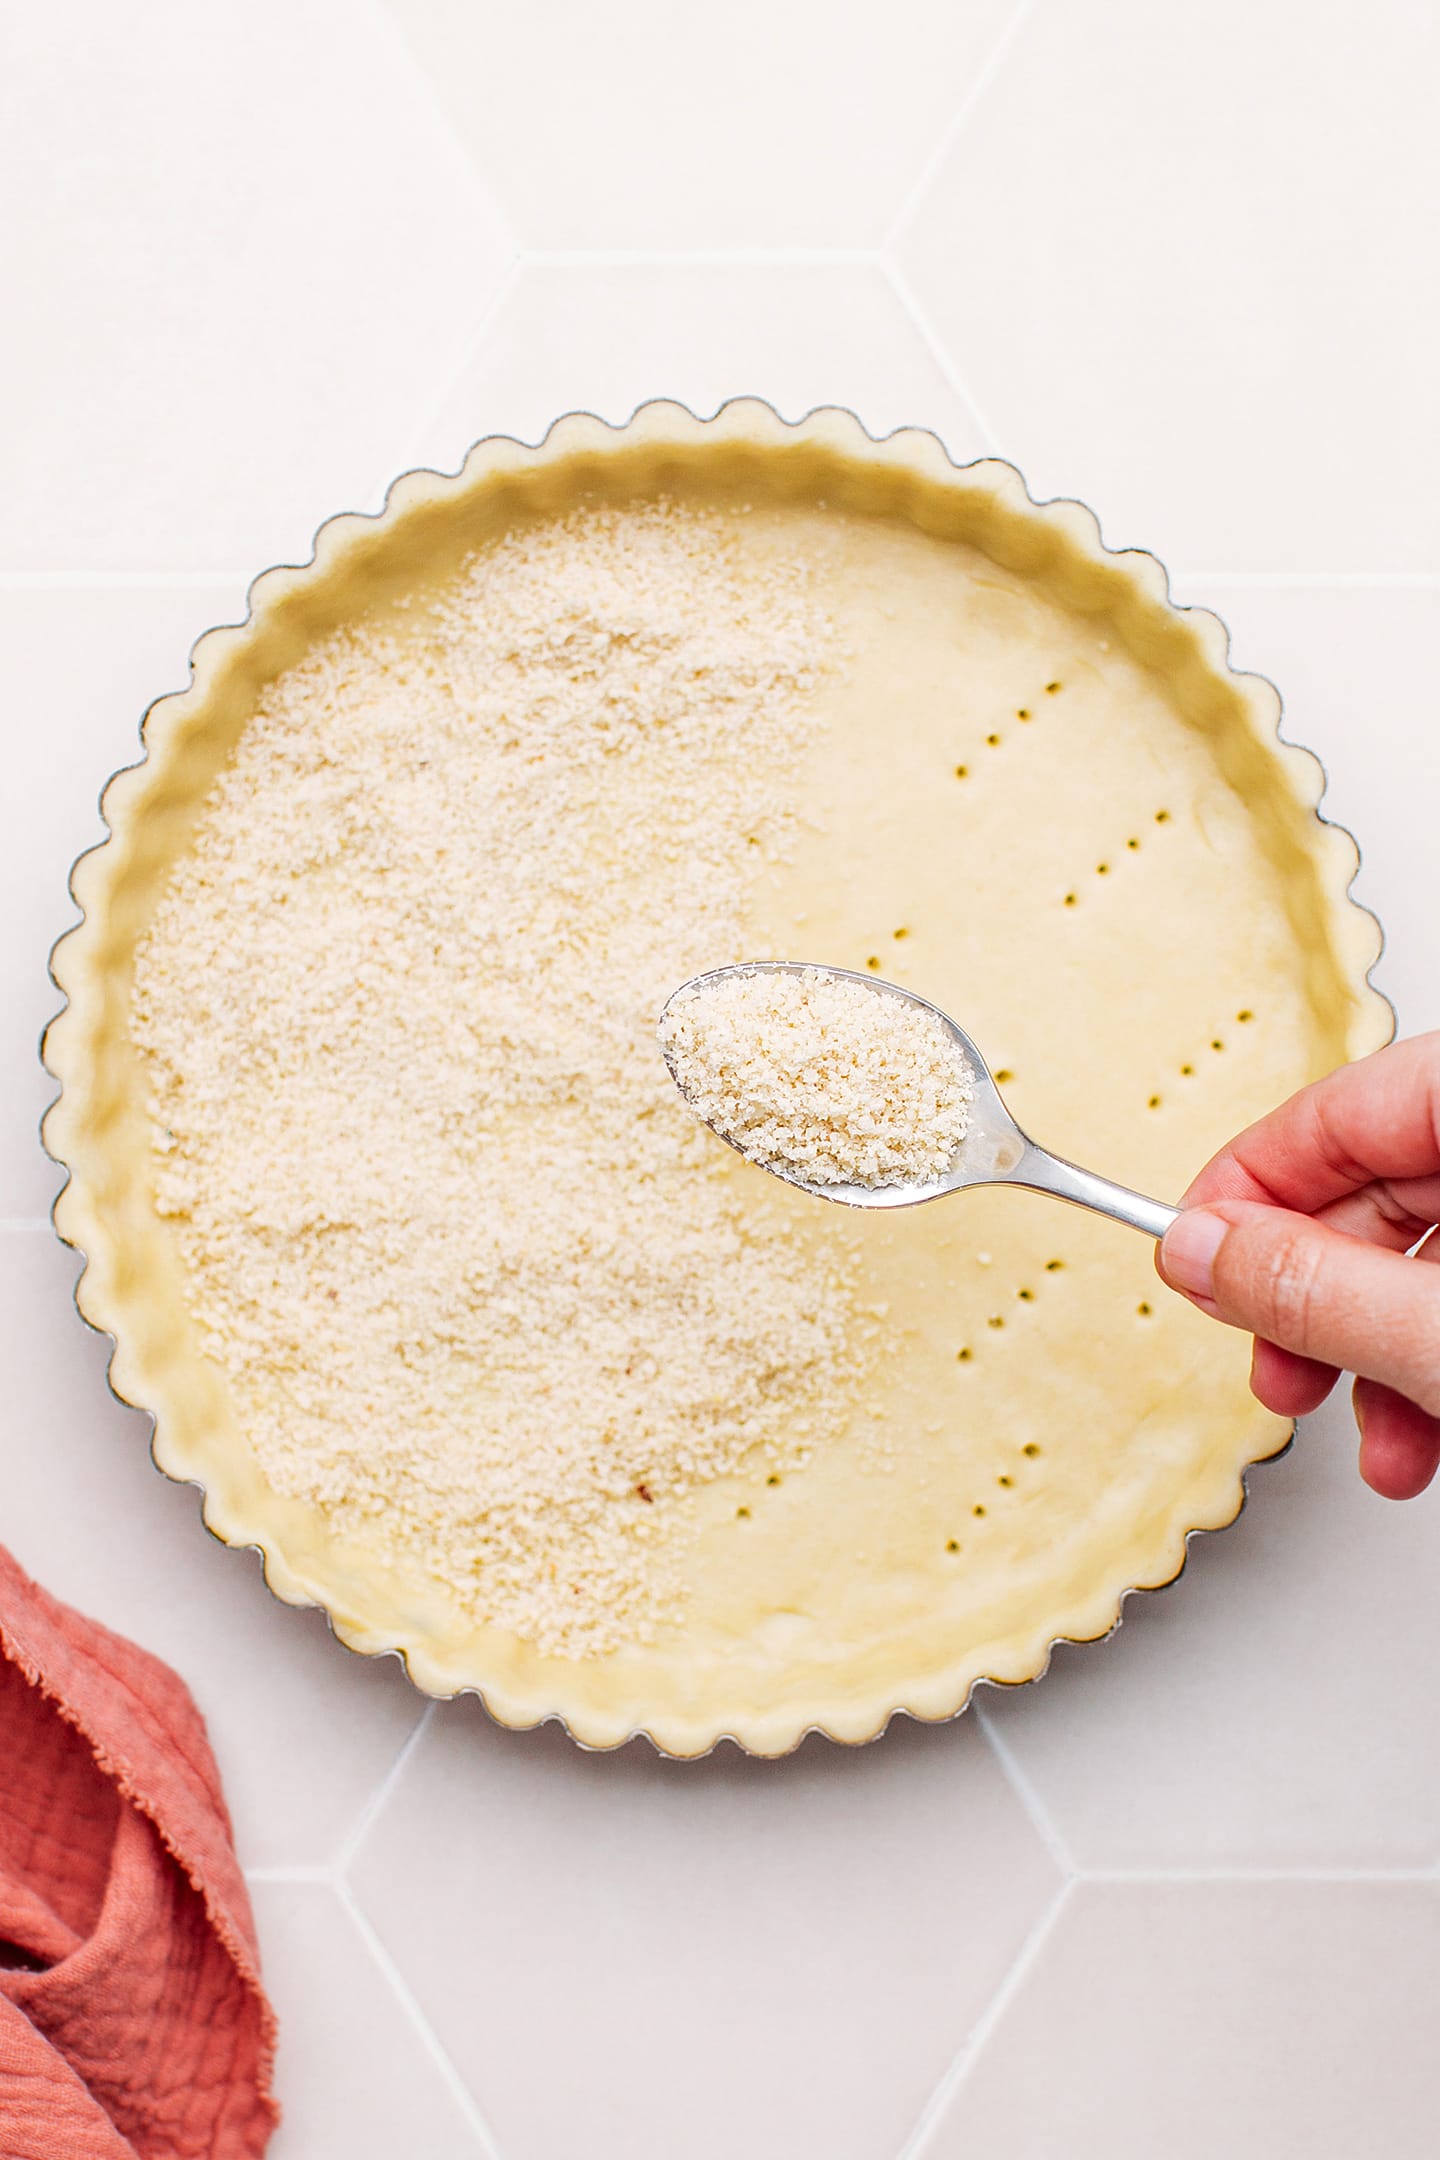 Sprinkling almond flour on an unbaked pie crust.